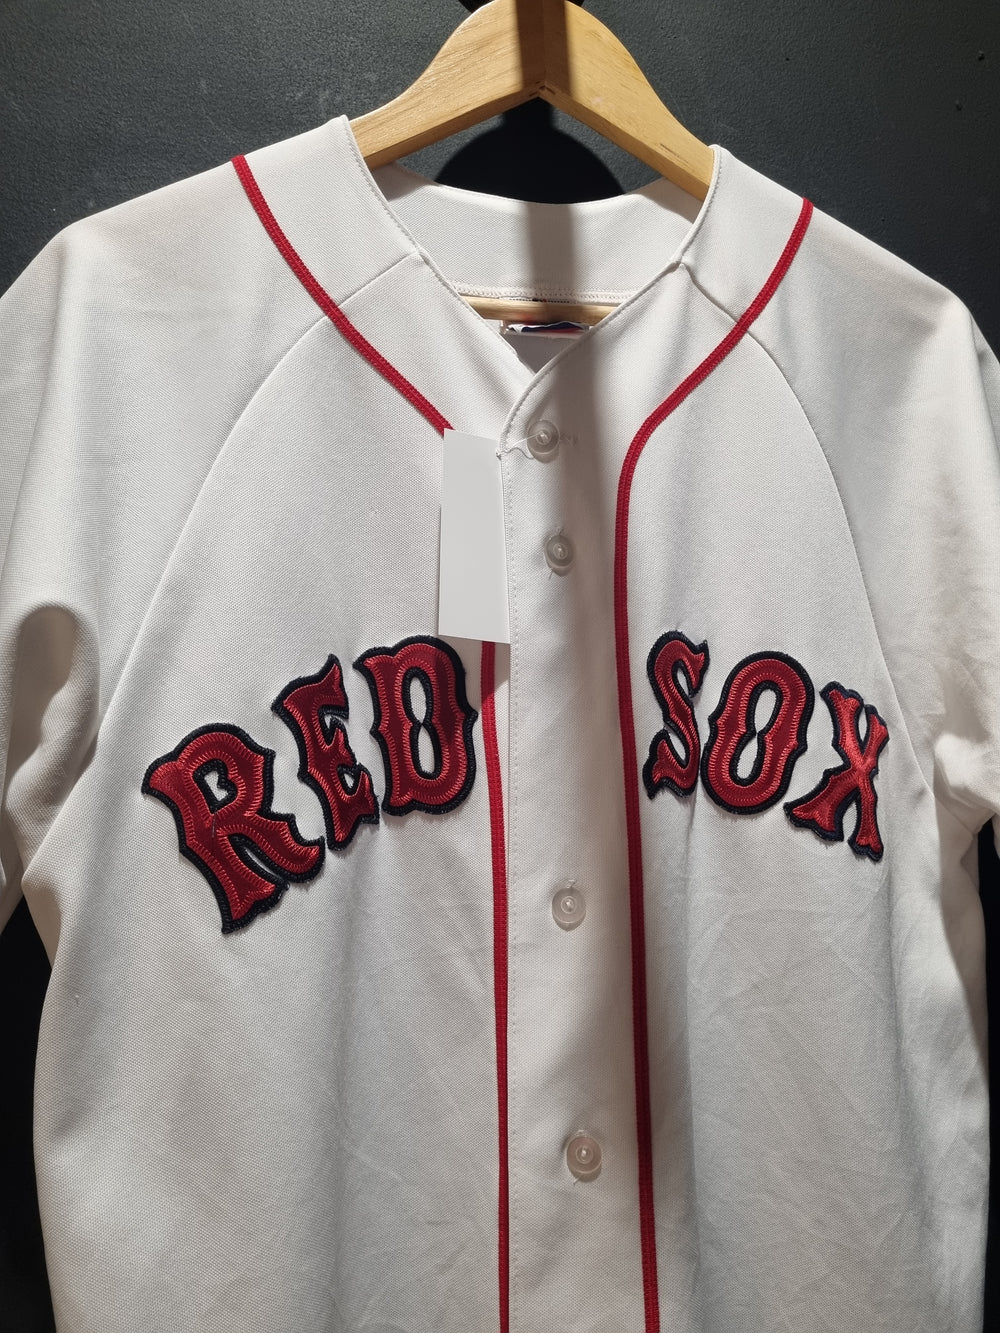 Red Sox Matsuzaka Large